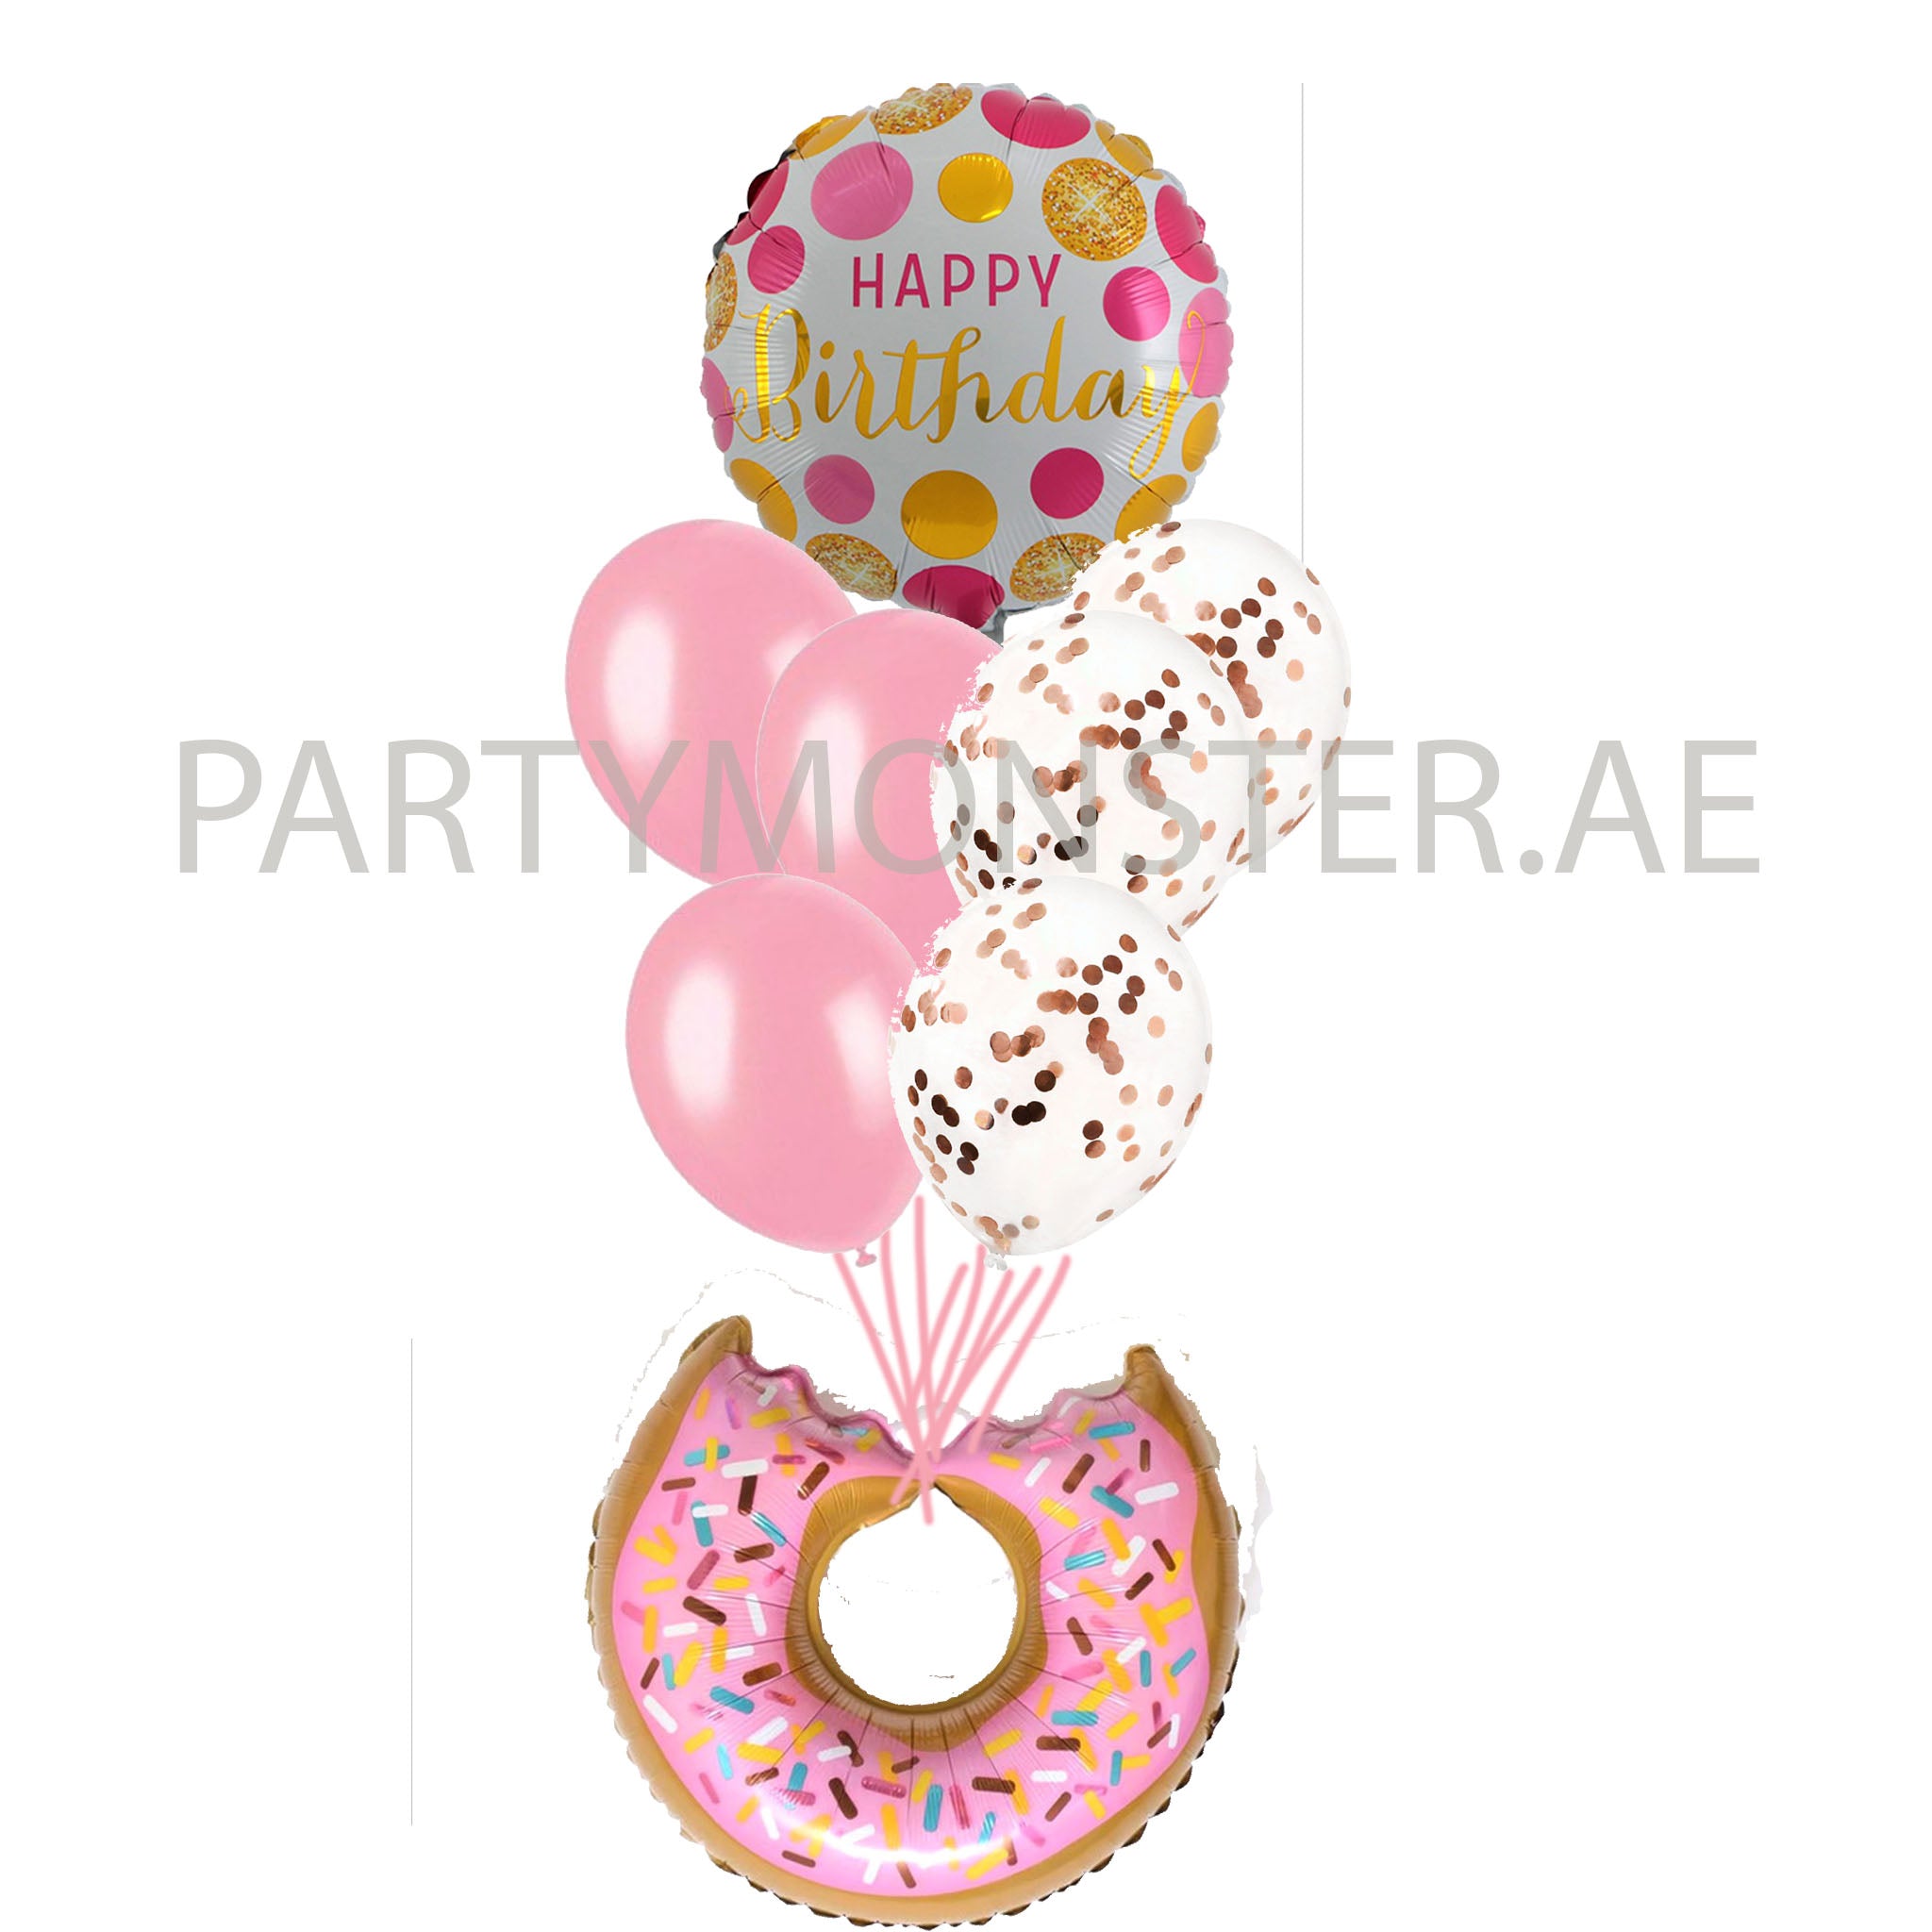 Donut birthday bouquet 01 - PartyMonster.ae